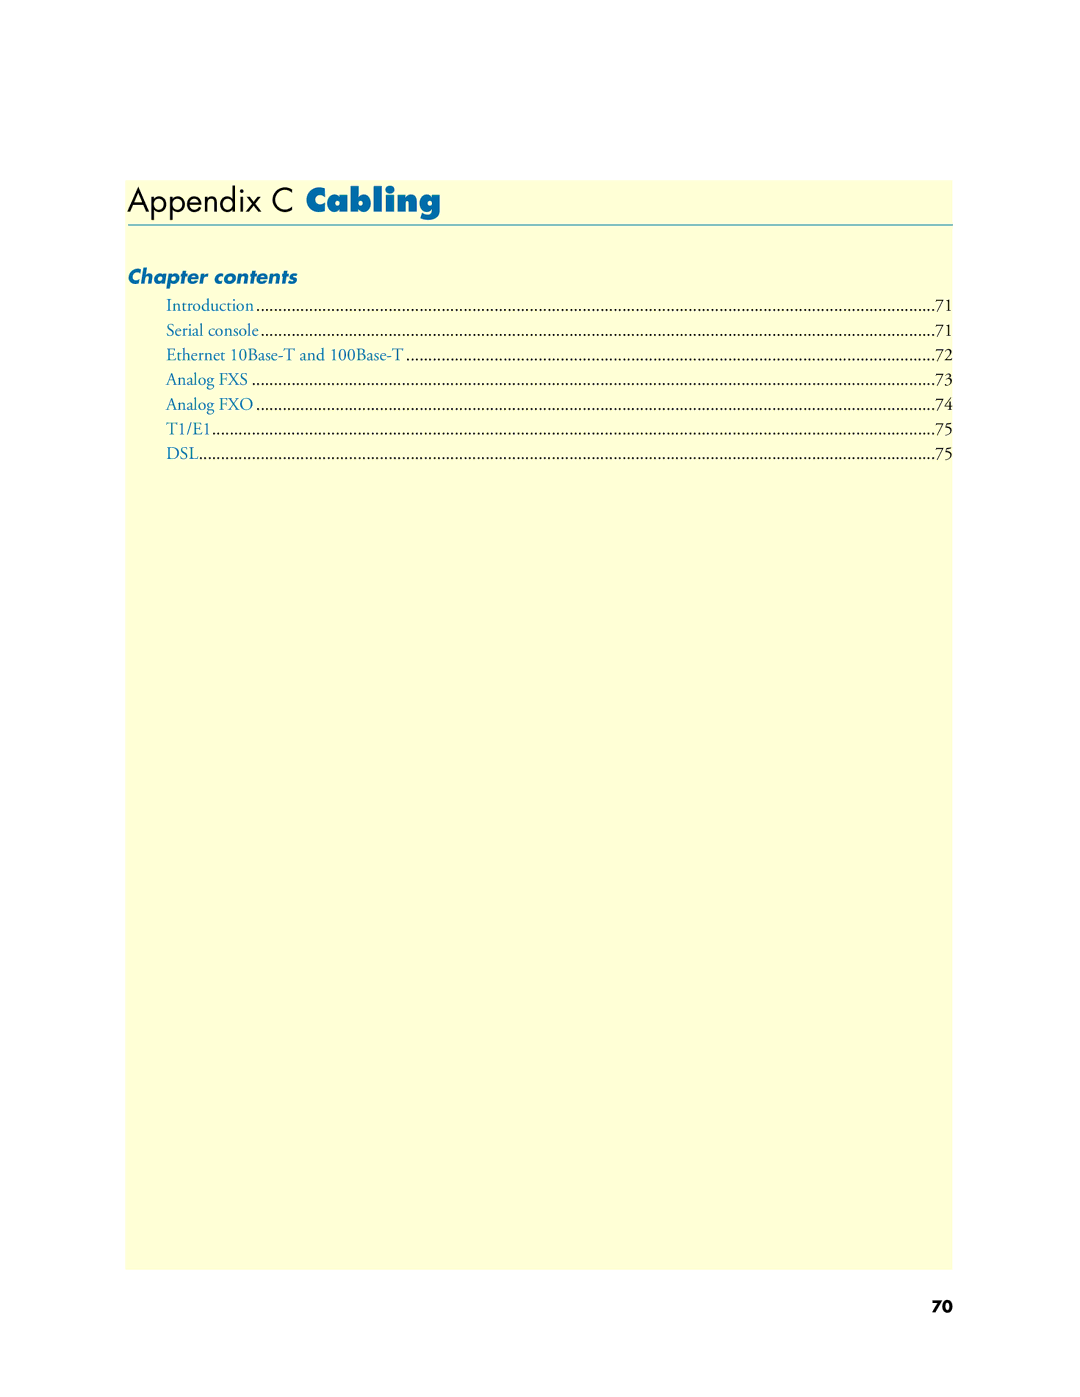 Patton electronic 4830 manual Appendix C Cabling 